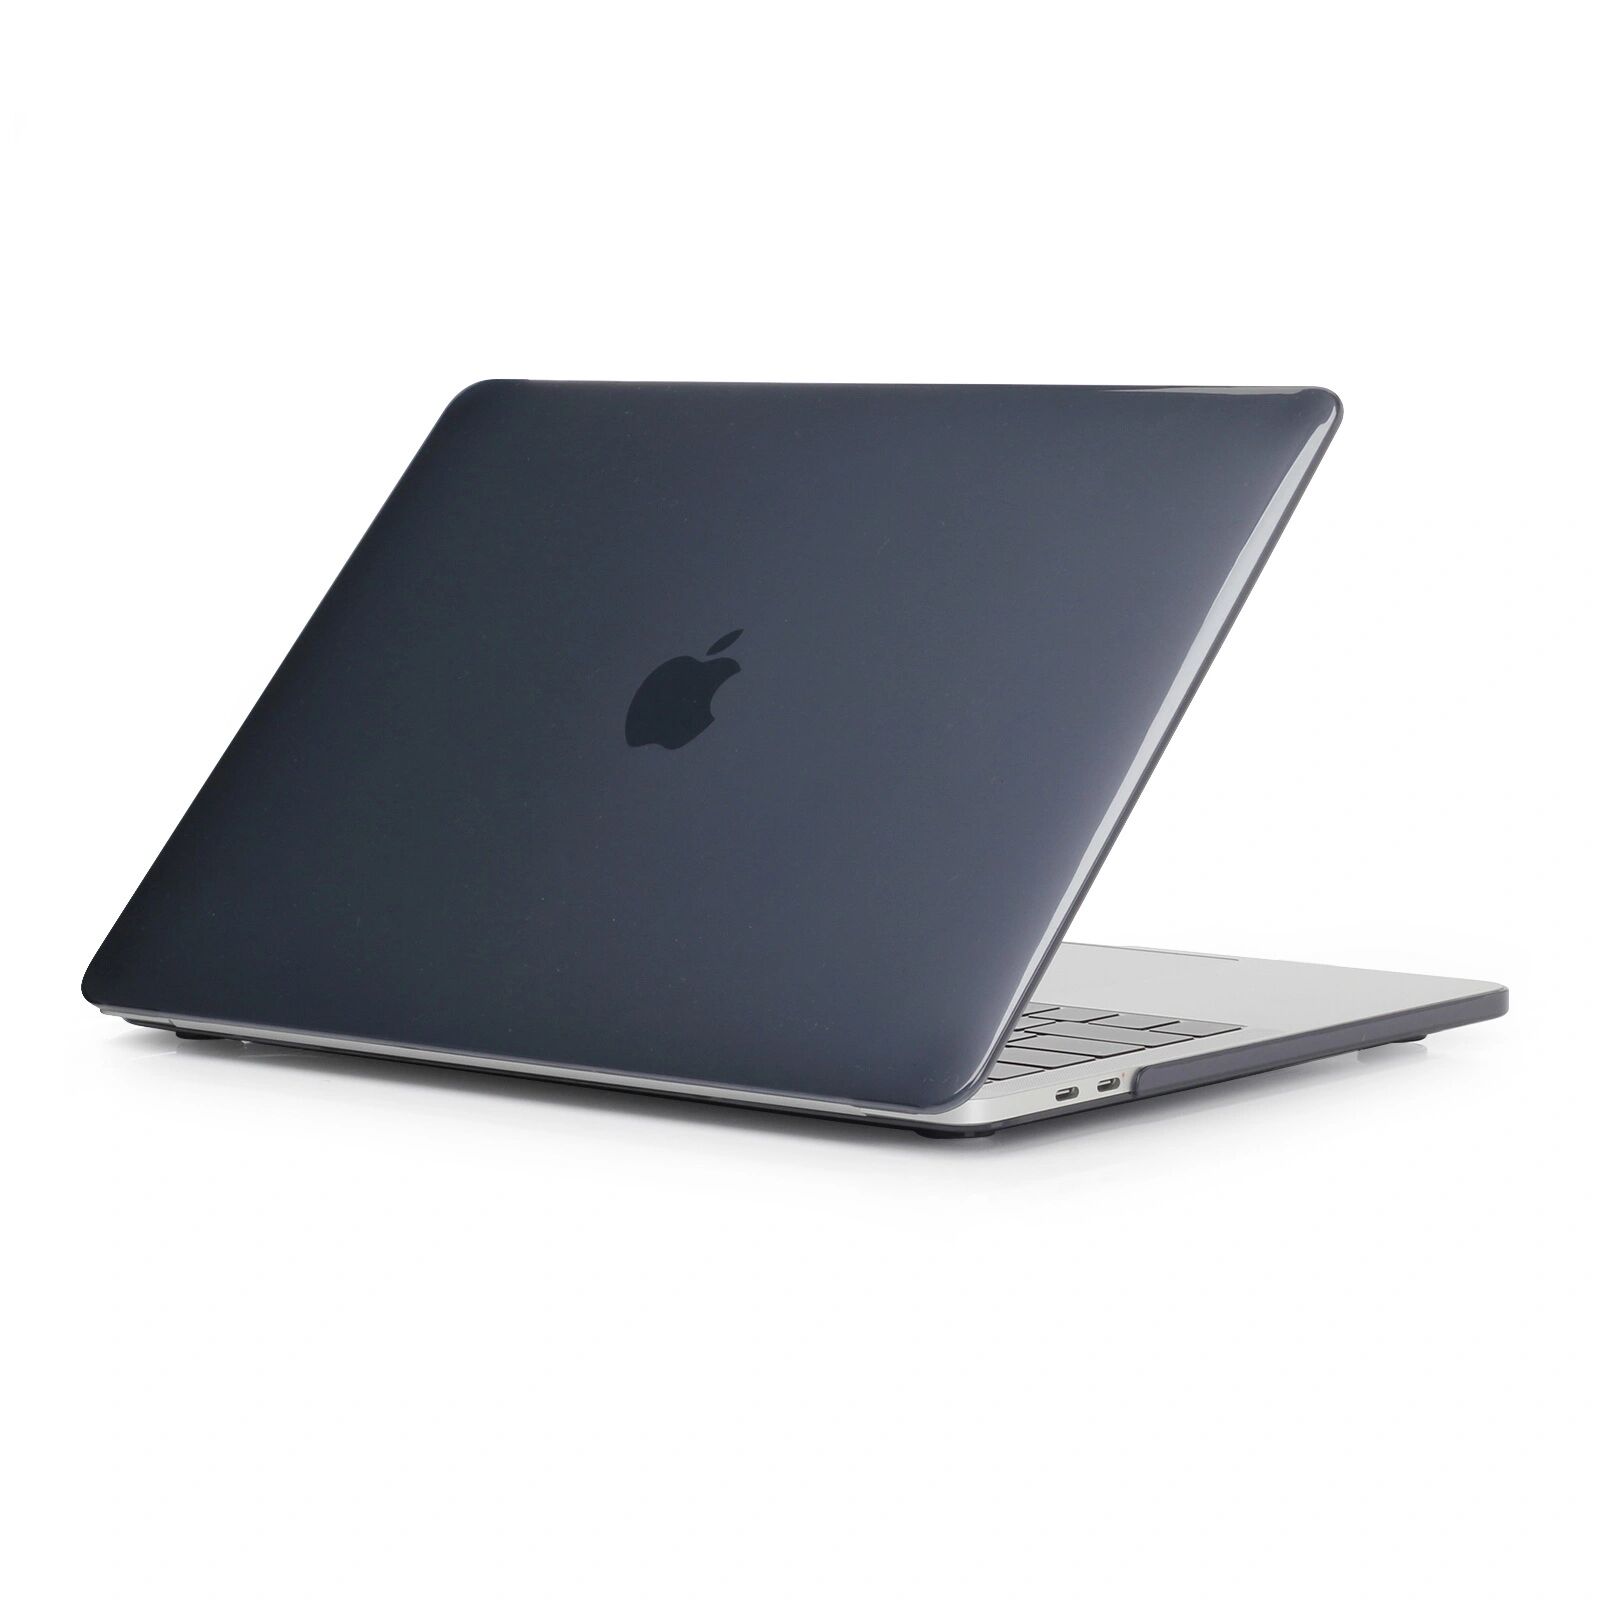 iPouzdro.cz Ochranný kryt na MacBook Pro 15 (2012-2015) - Crystal Black